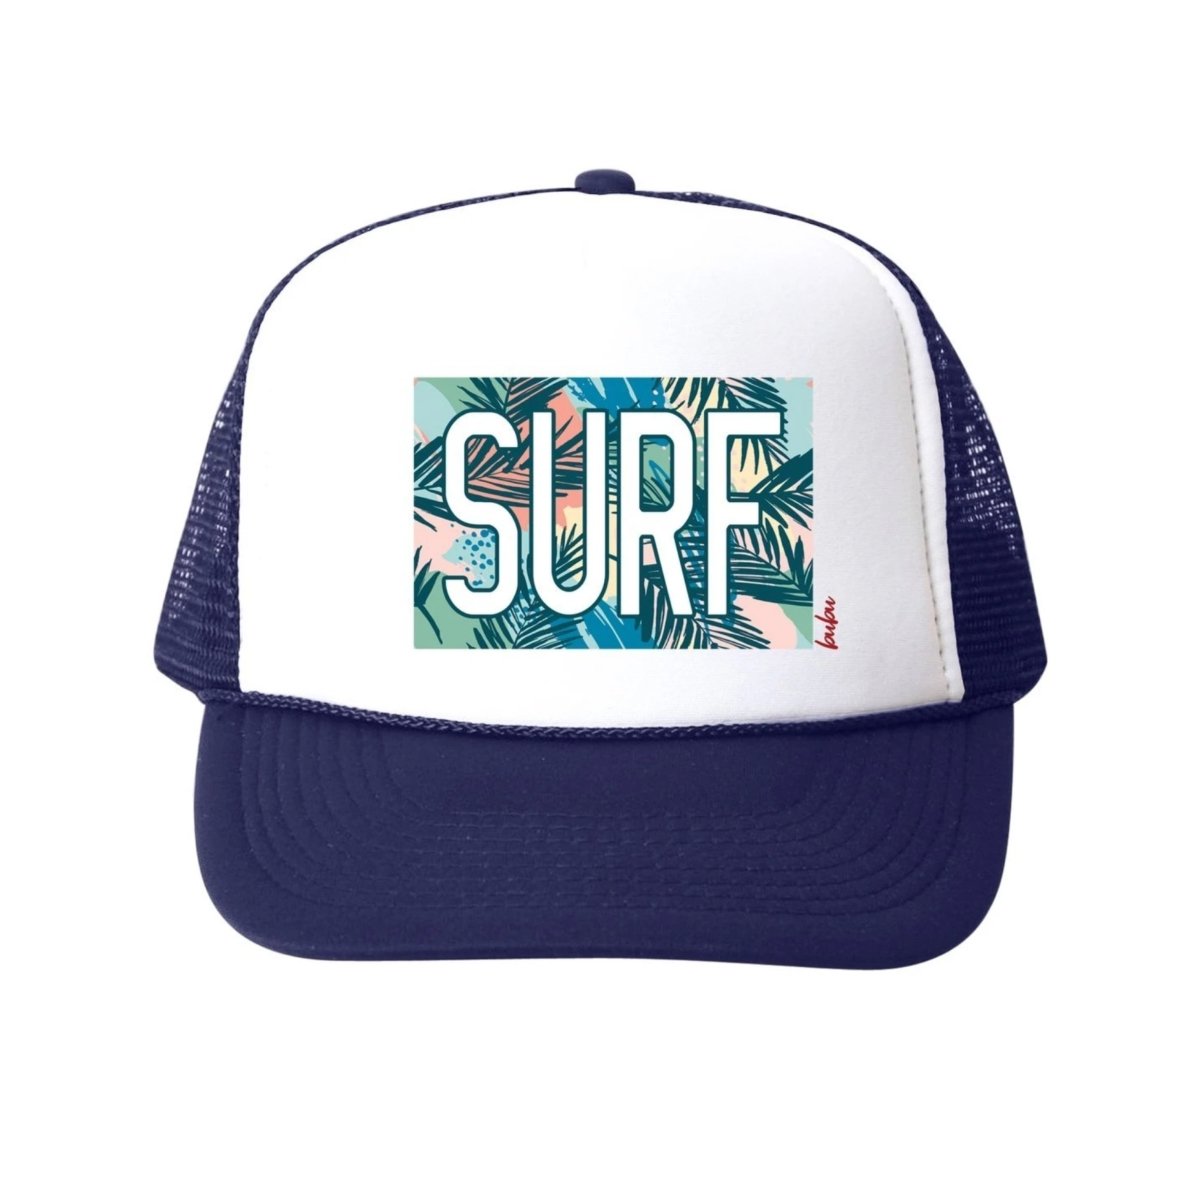 SURF FLORAL TRUCKER HAT - HATS